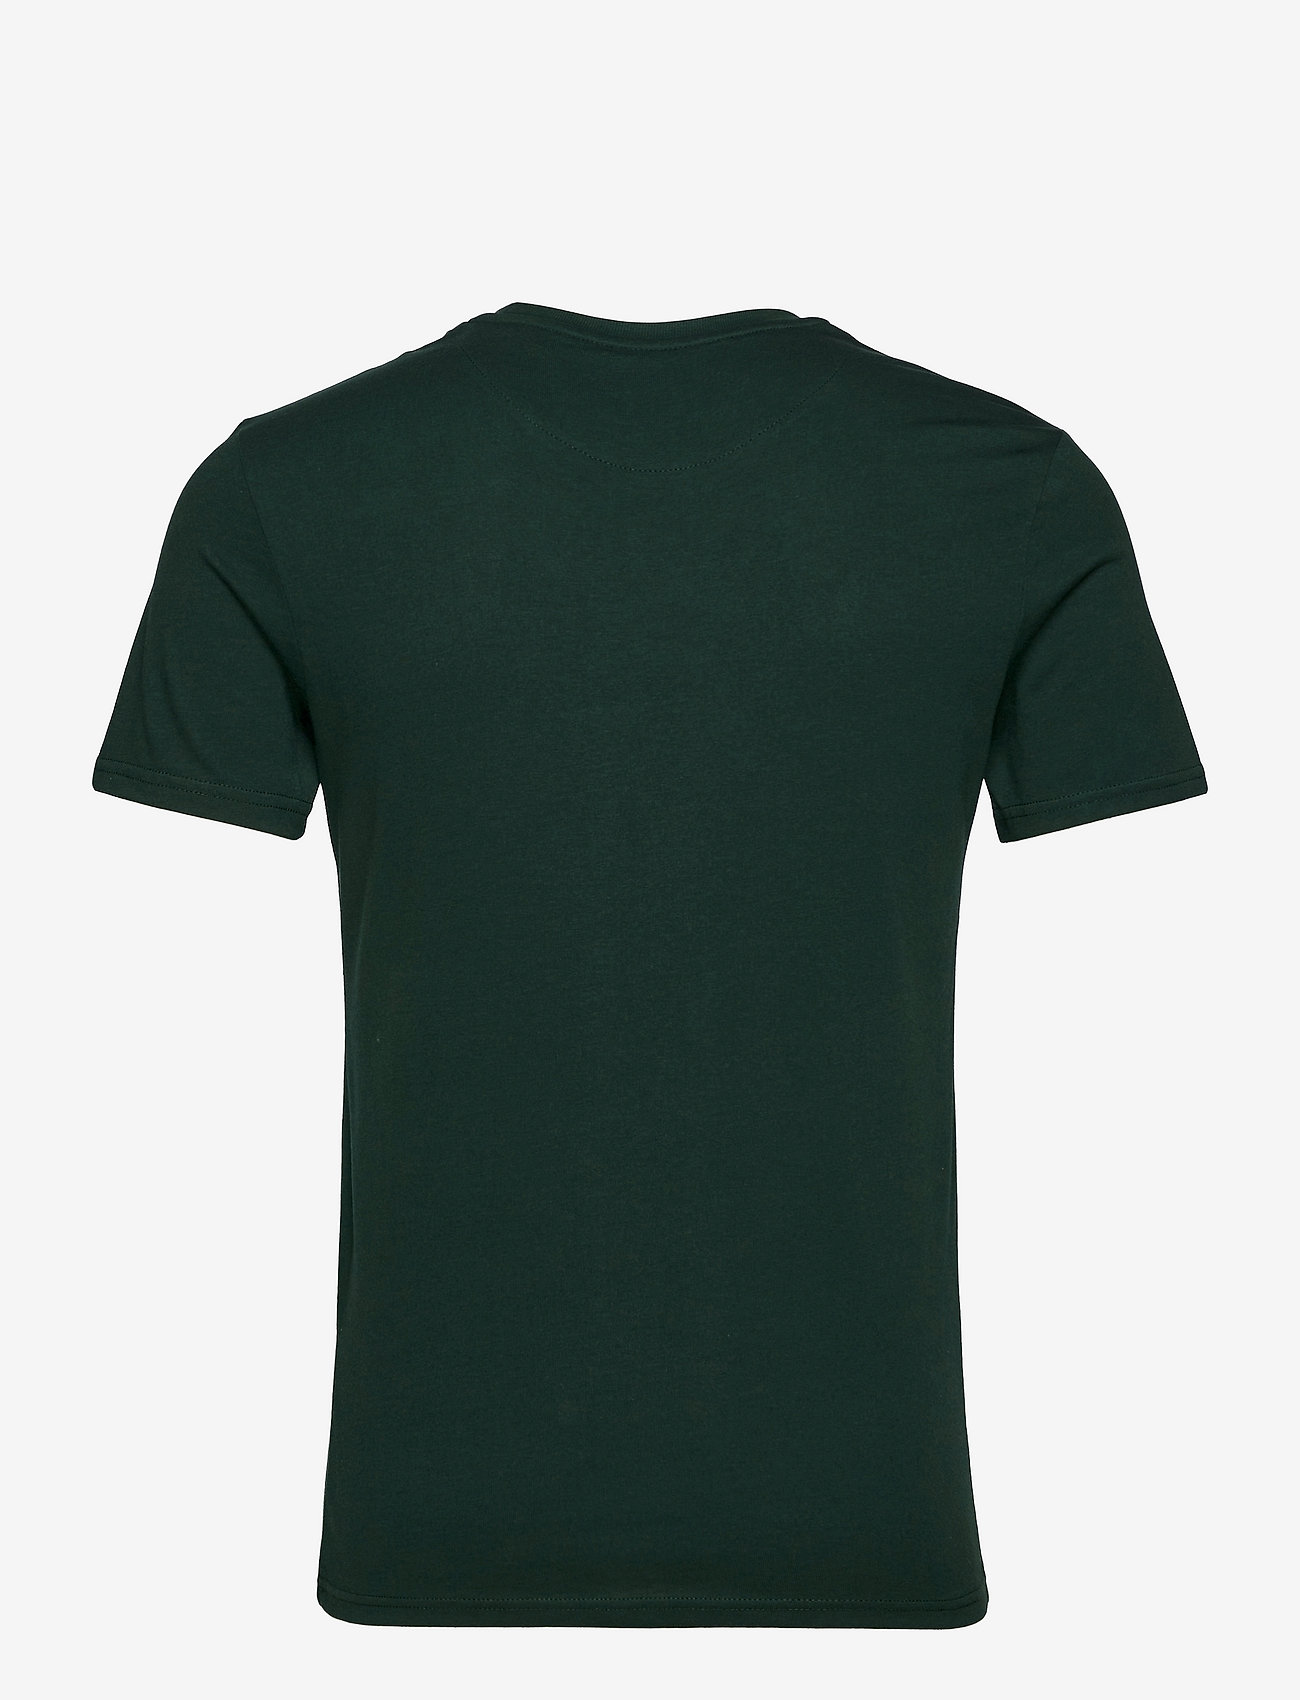 Lyle & Scott - Plain T-Shirt - najniższe ceny - dark green - 1